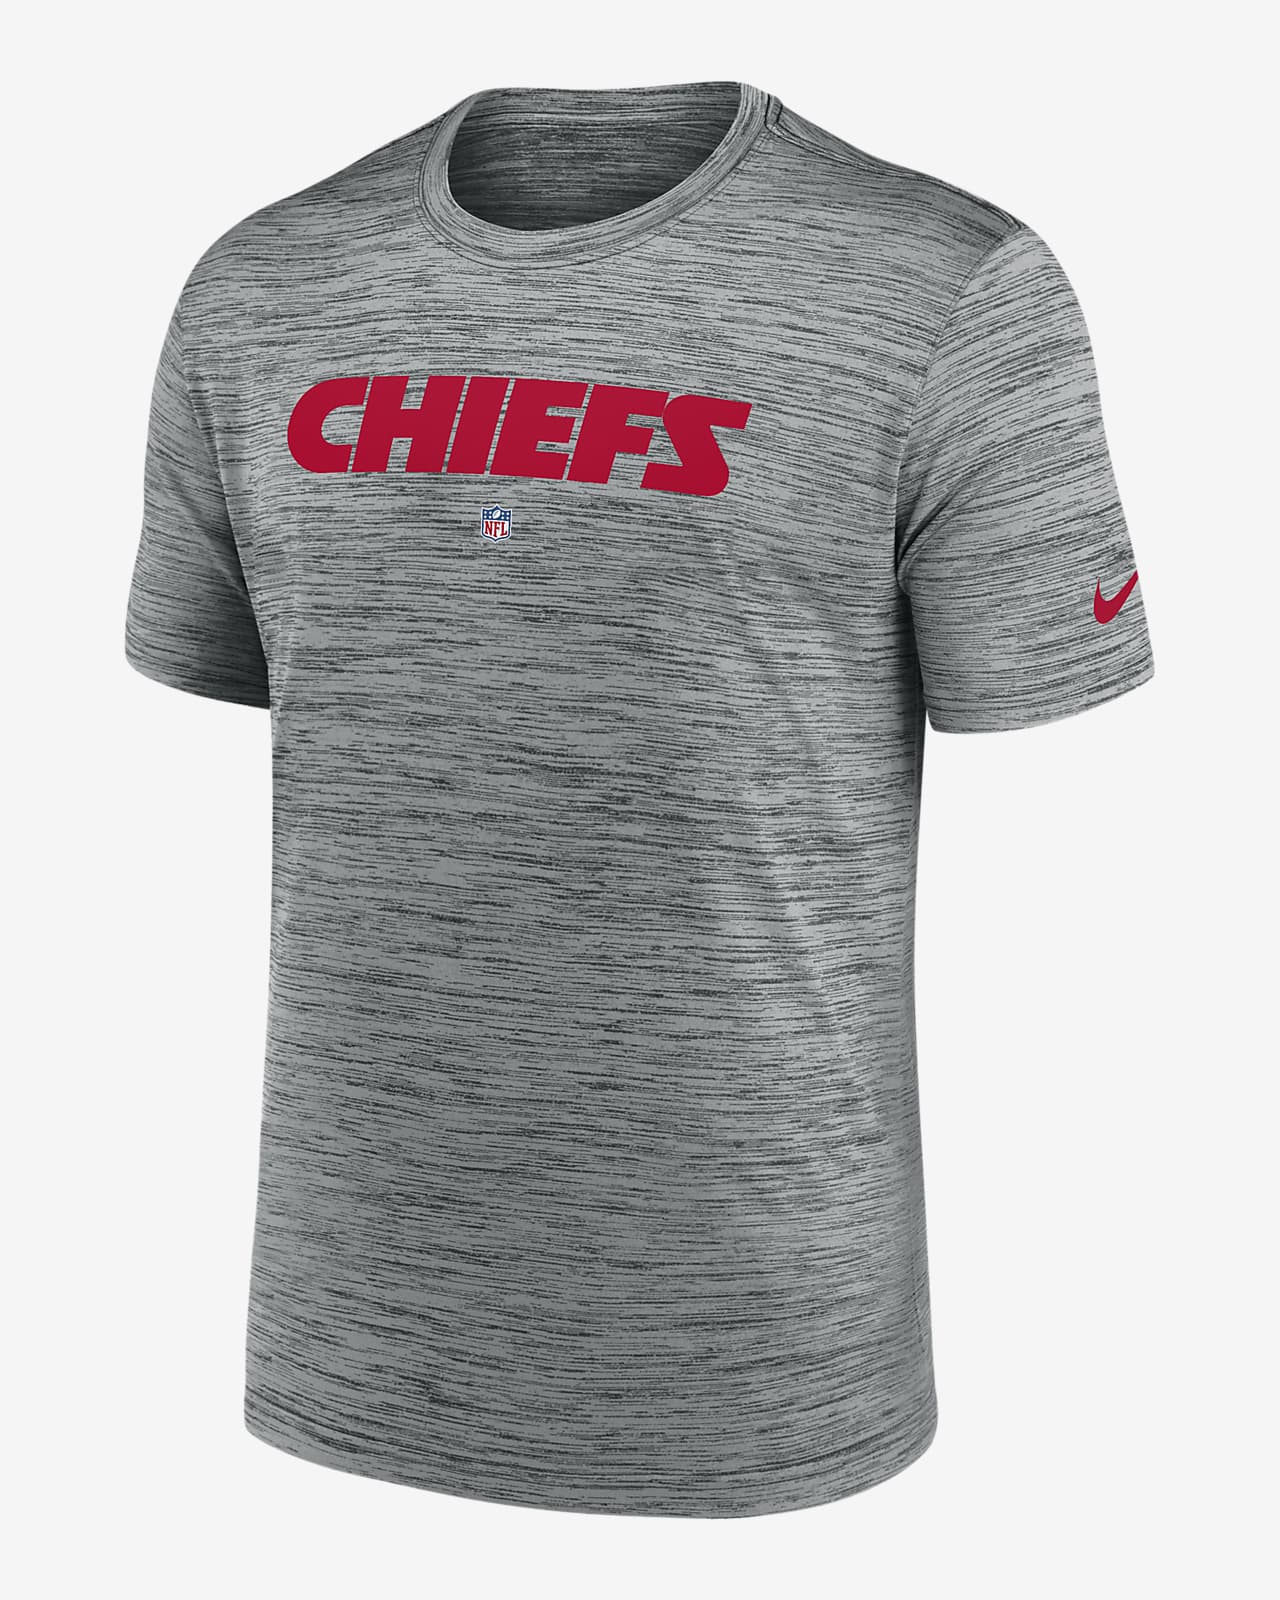 kc chiefs dri fit shirt